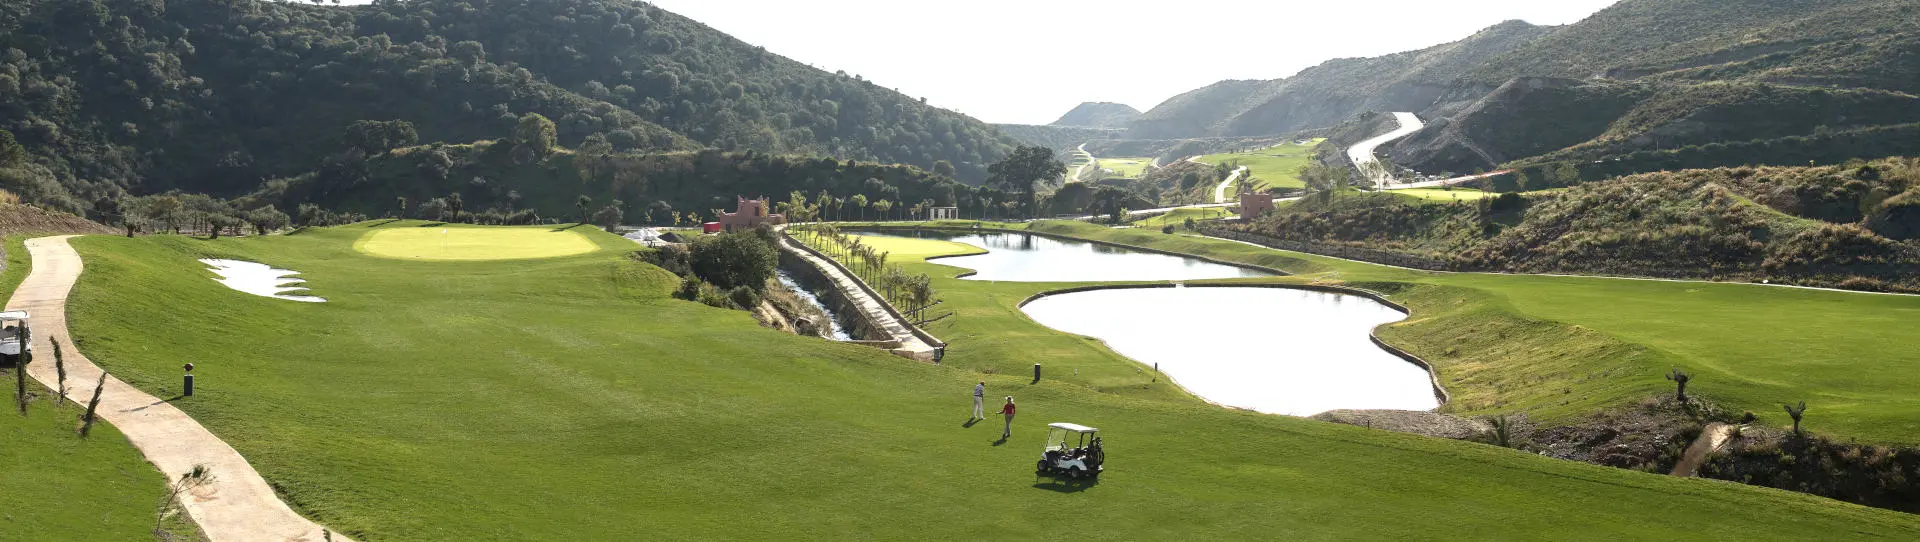 Spain golf courses - Alferini Golf at Villa Padierna - Photo 1